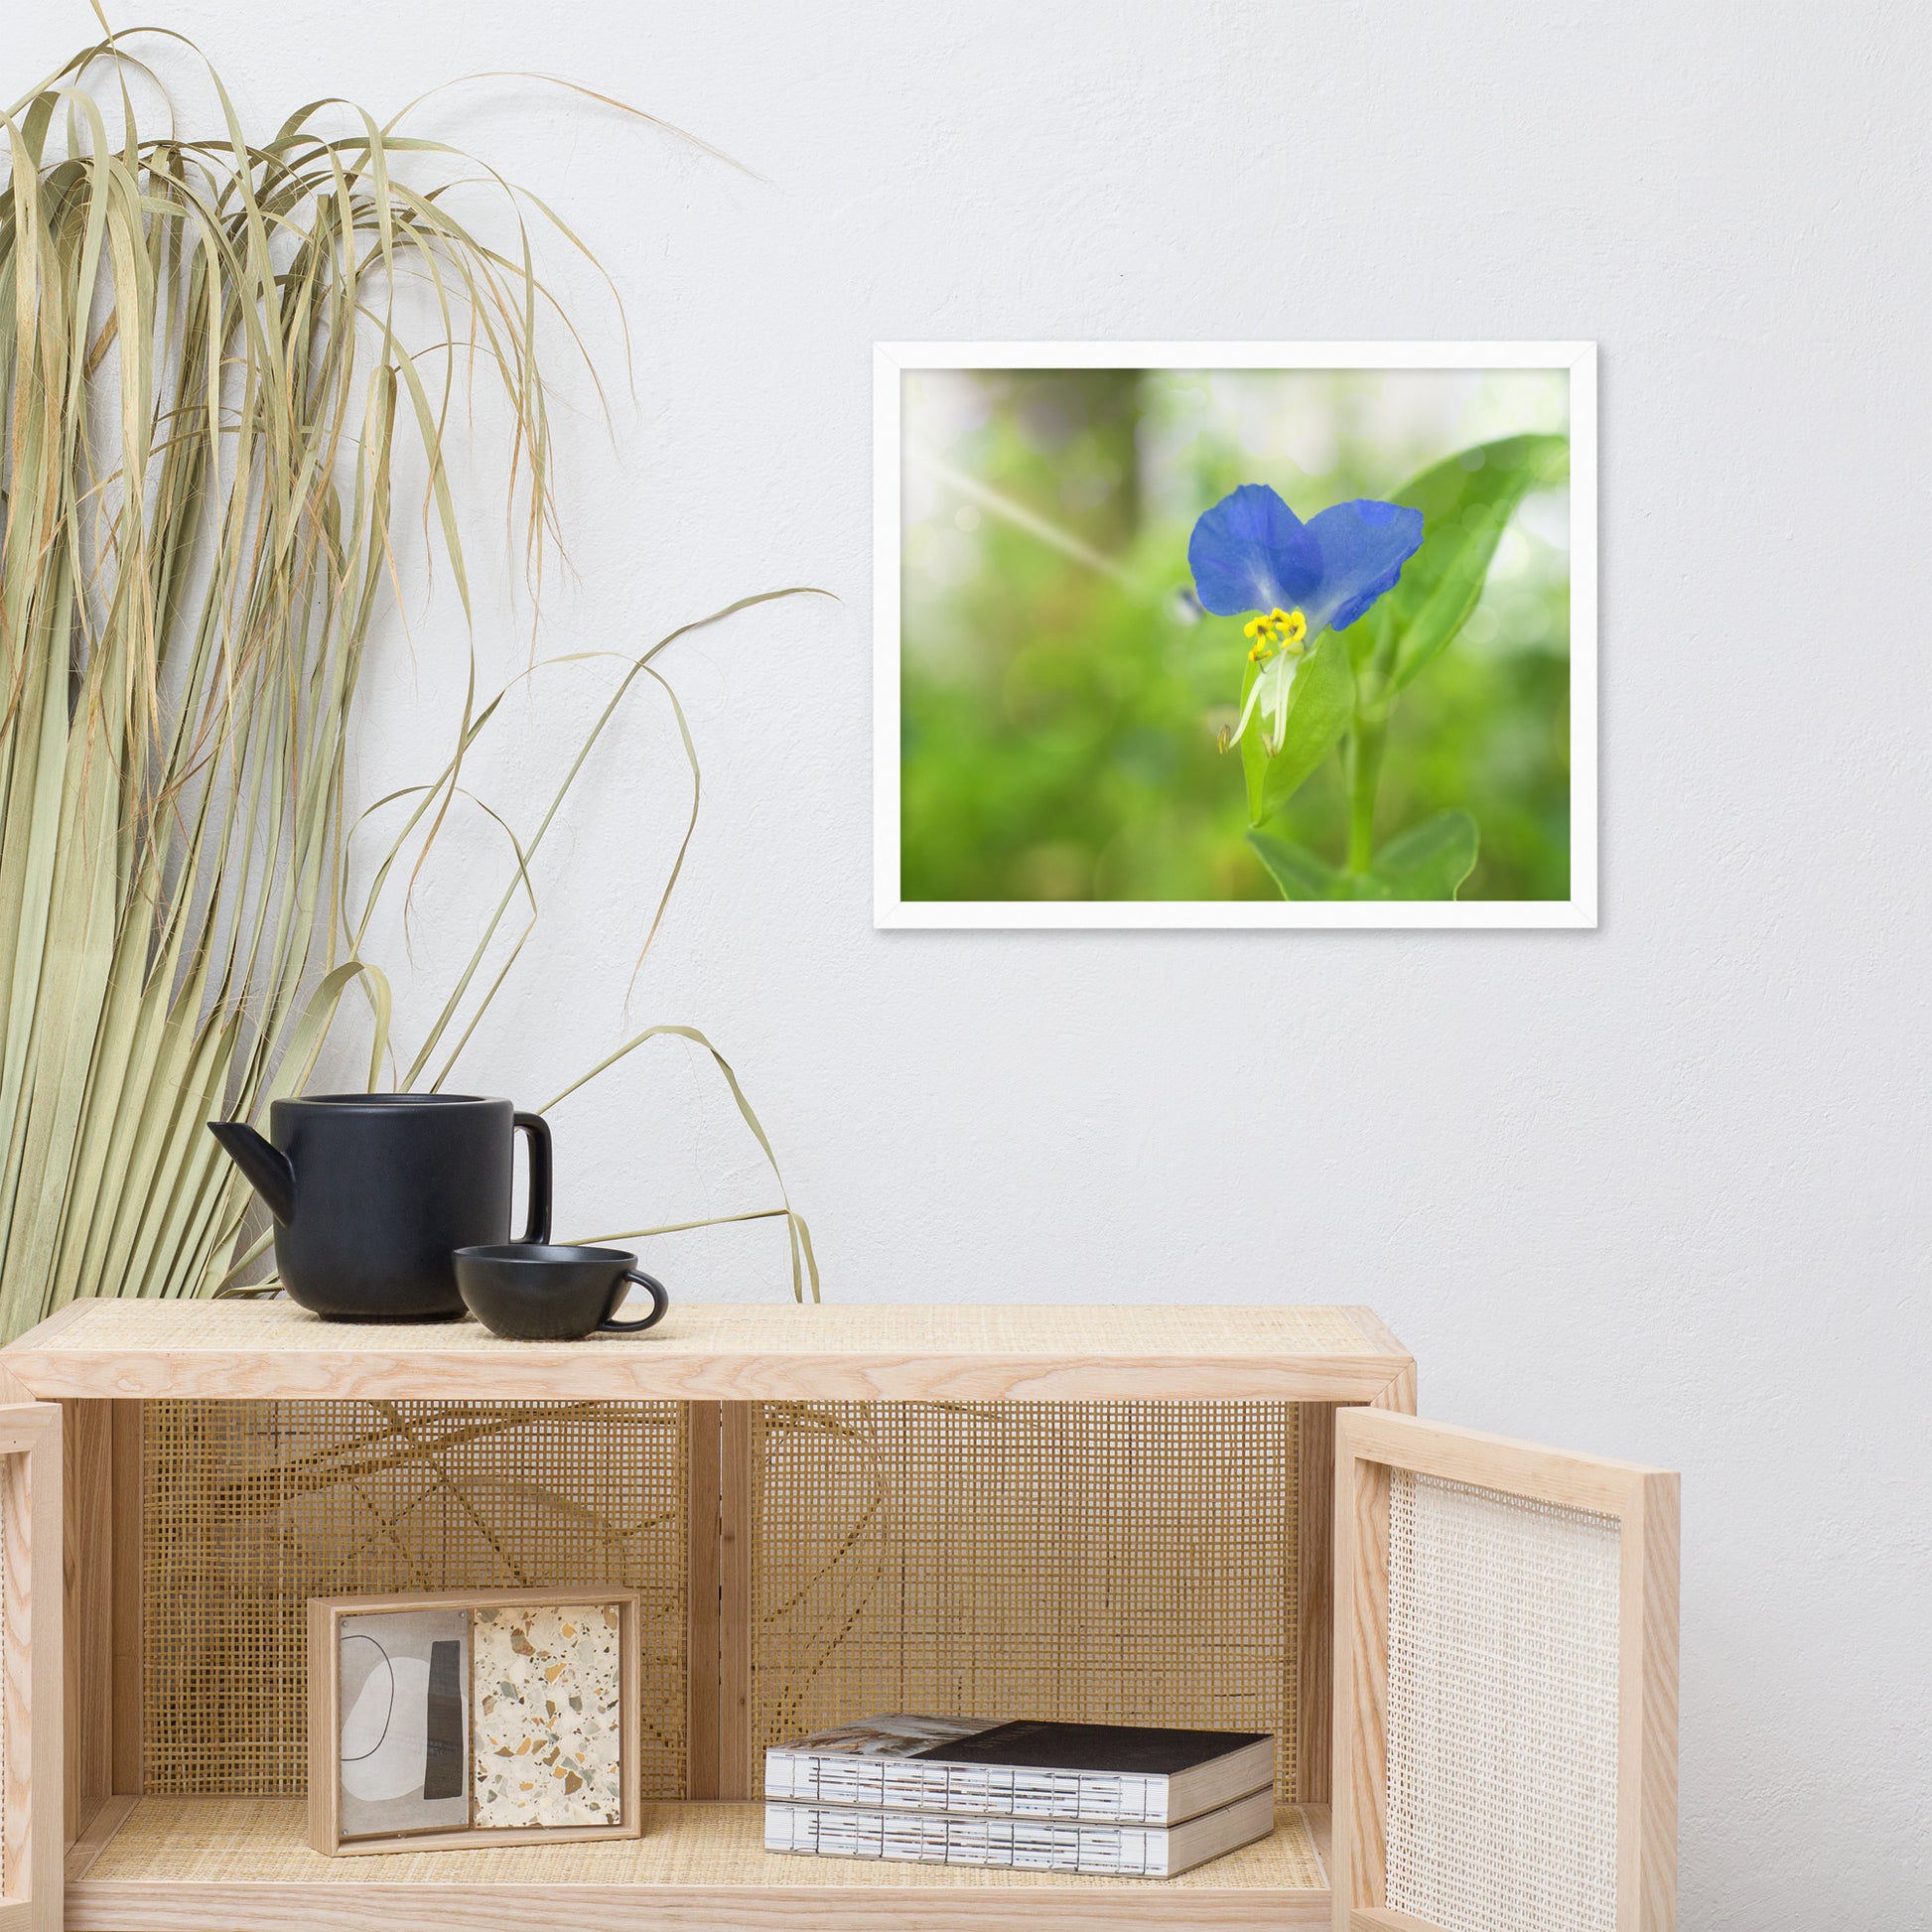 Blue Artwork For Kitchen: Asiatic Dayflower - Floral / Botanical / Nature Photo Framed Wall Art Print - Artwork - Modern Wall Decor